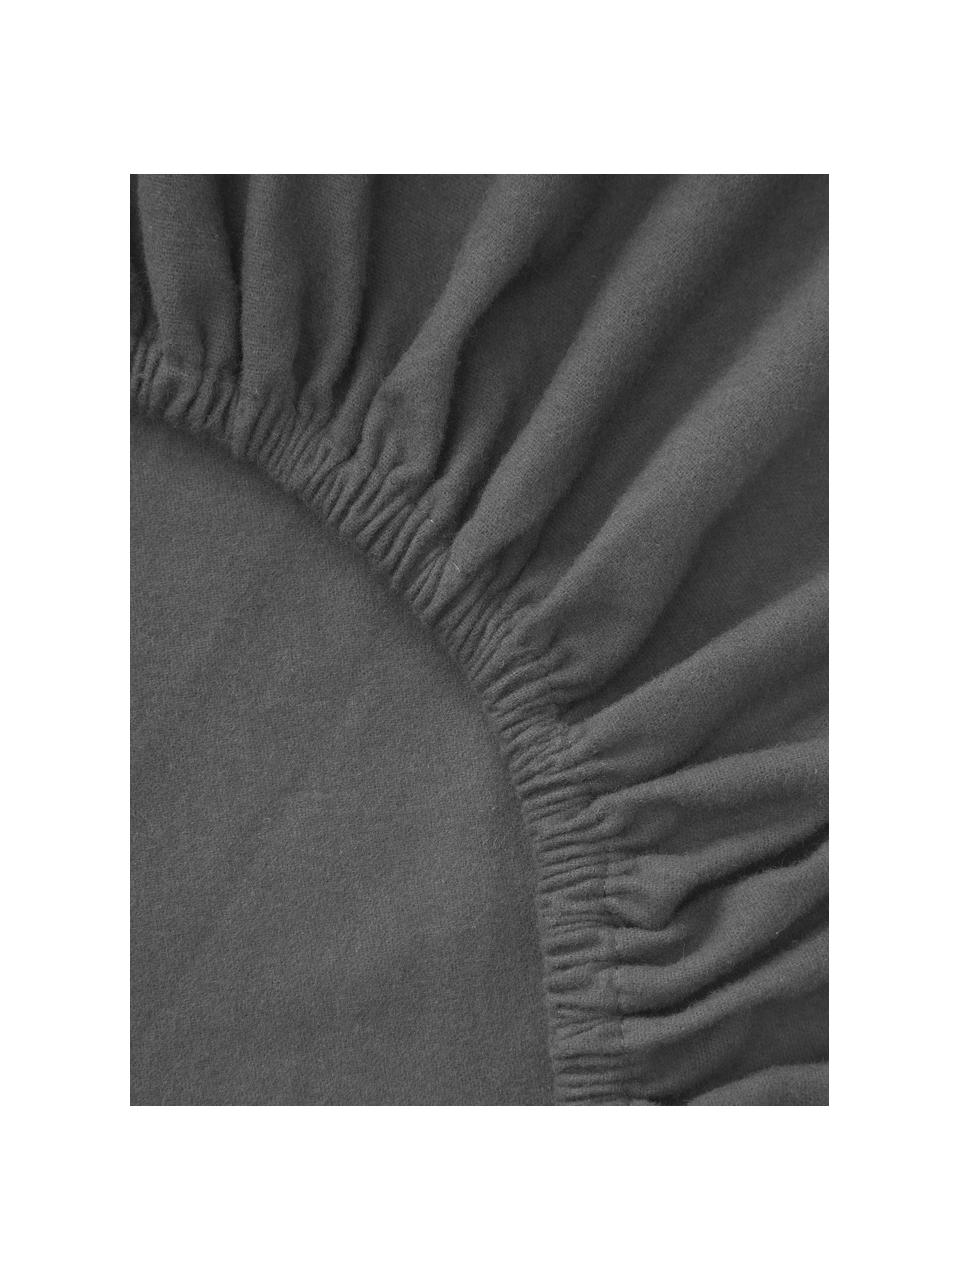 Sábana bajera de franela Biba, Gris oscuro, Cama 90 cm (90 x 200 x 35 cm)